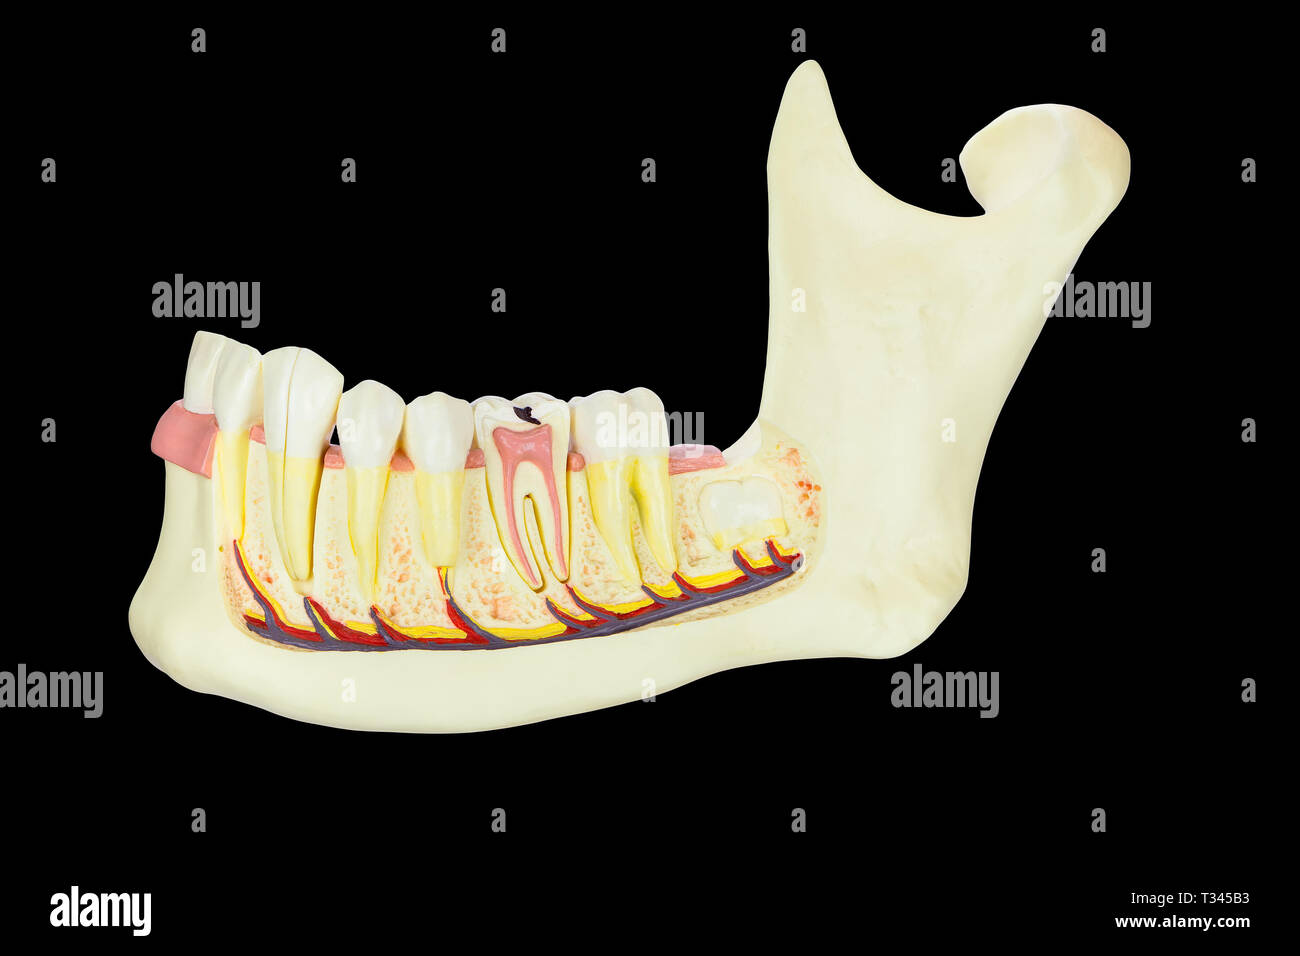 Modelo de mandíbula humana con dientes aislado sobre fondo negro Foto de stock